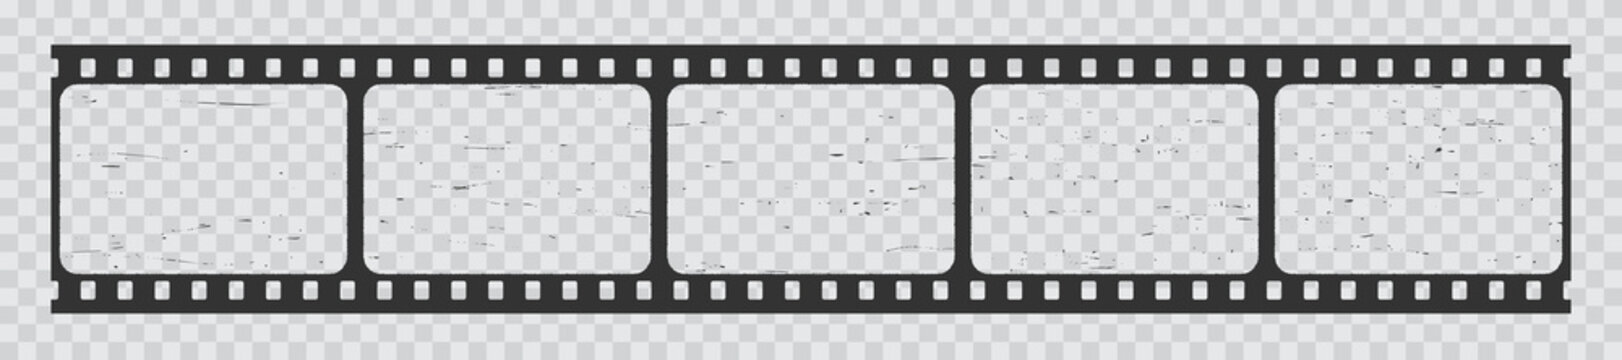 Film strip frames, old cinema filmstrip long reel or vintage grunge negative, vector background with borders. Video camera transparent film strip, photo tape or movie and motion picture filmstrip